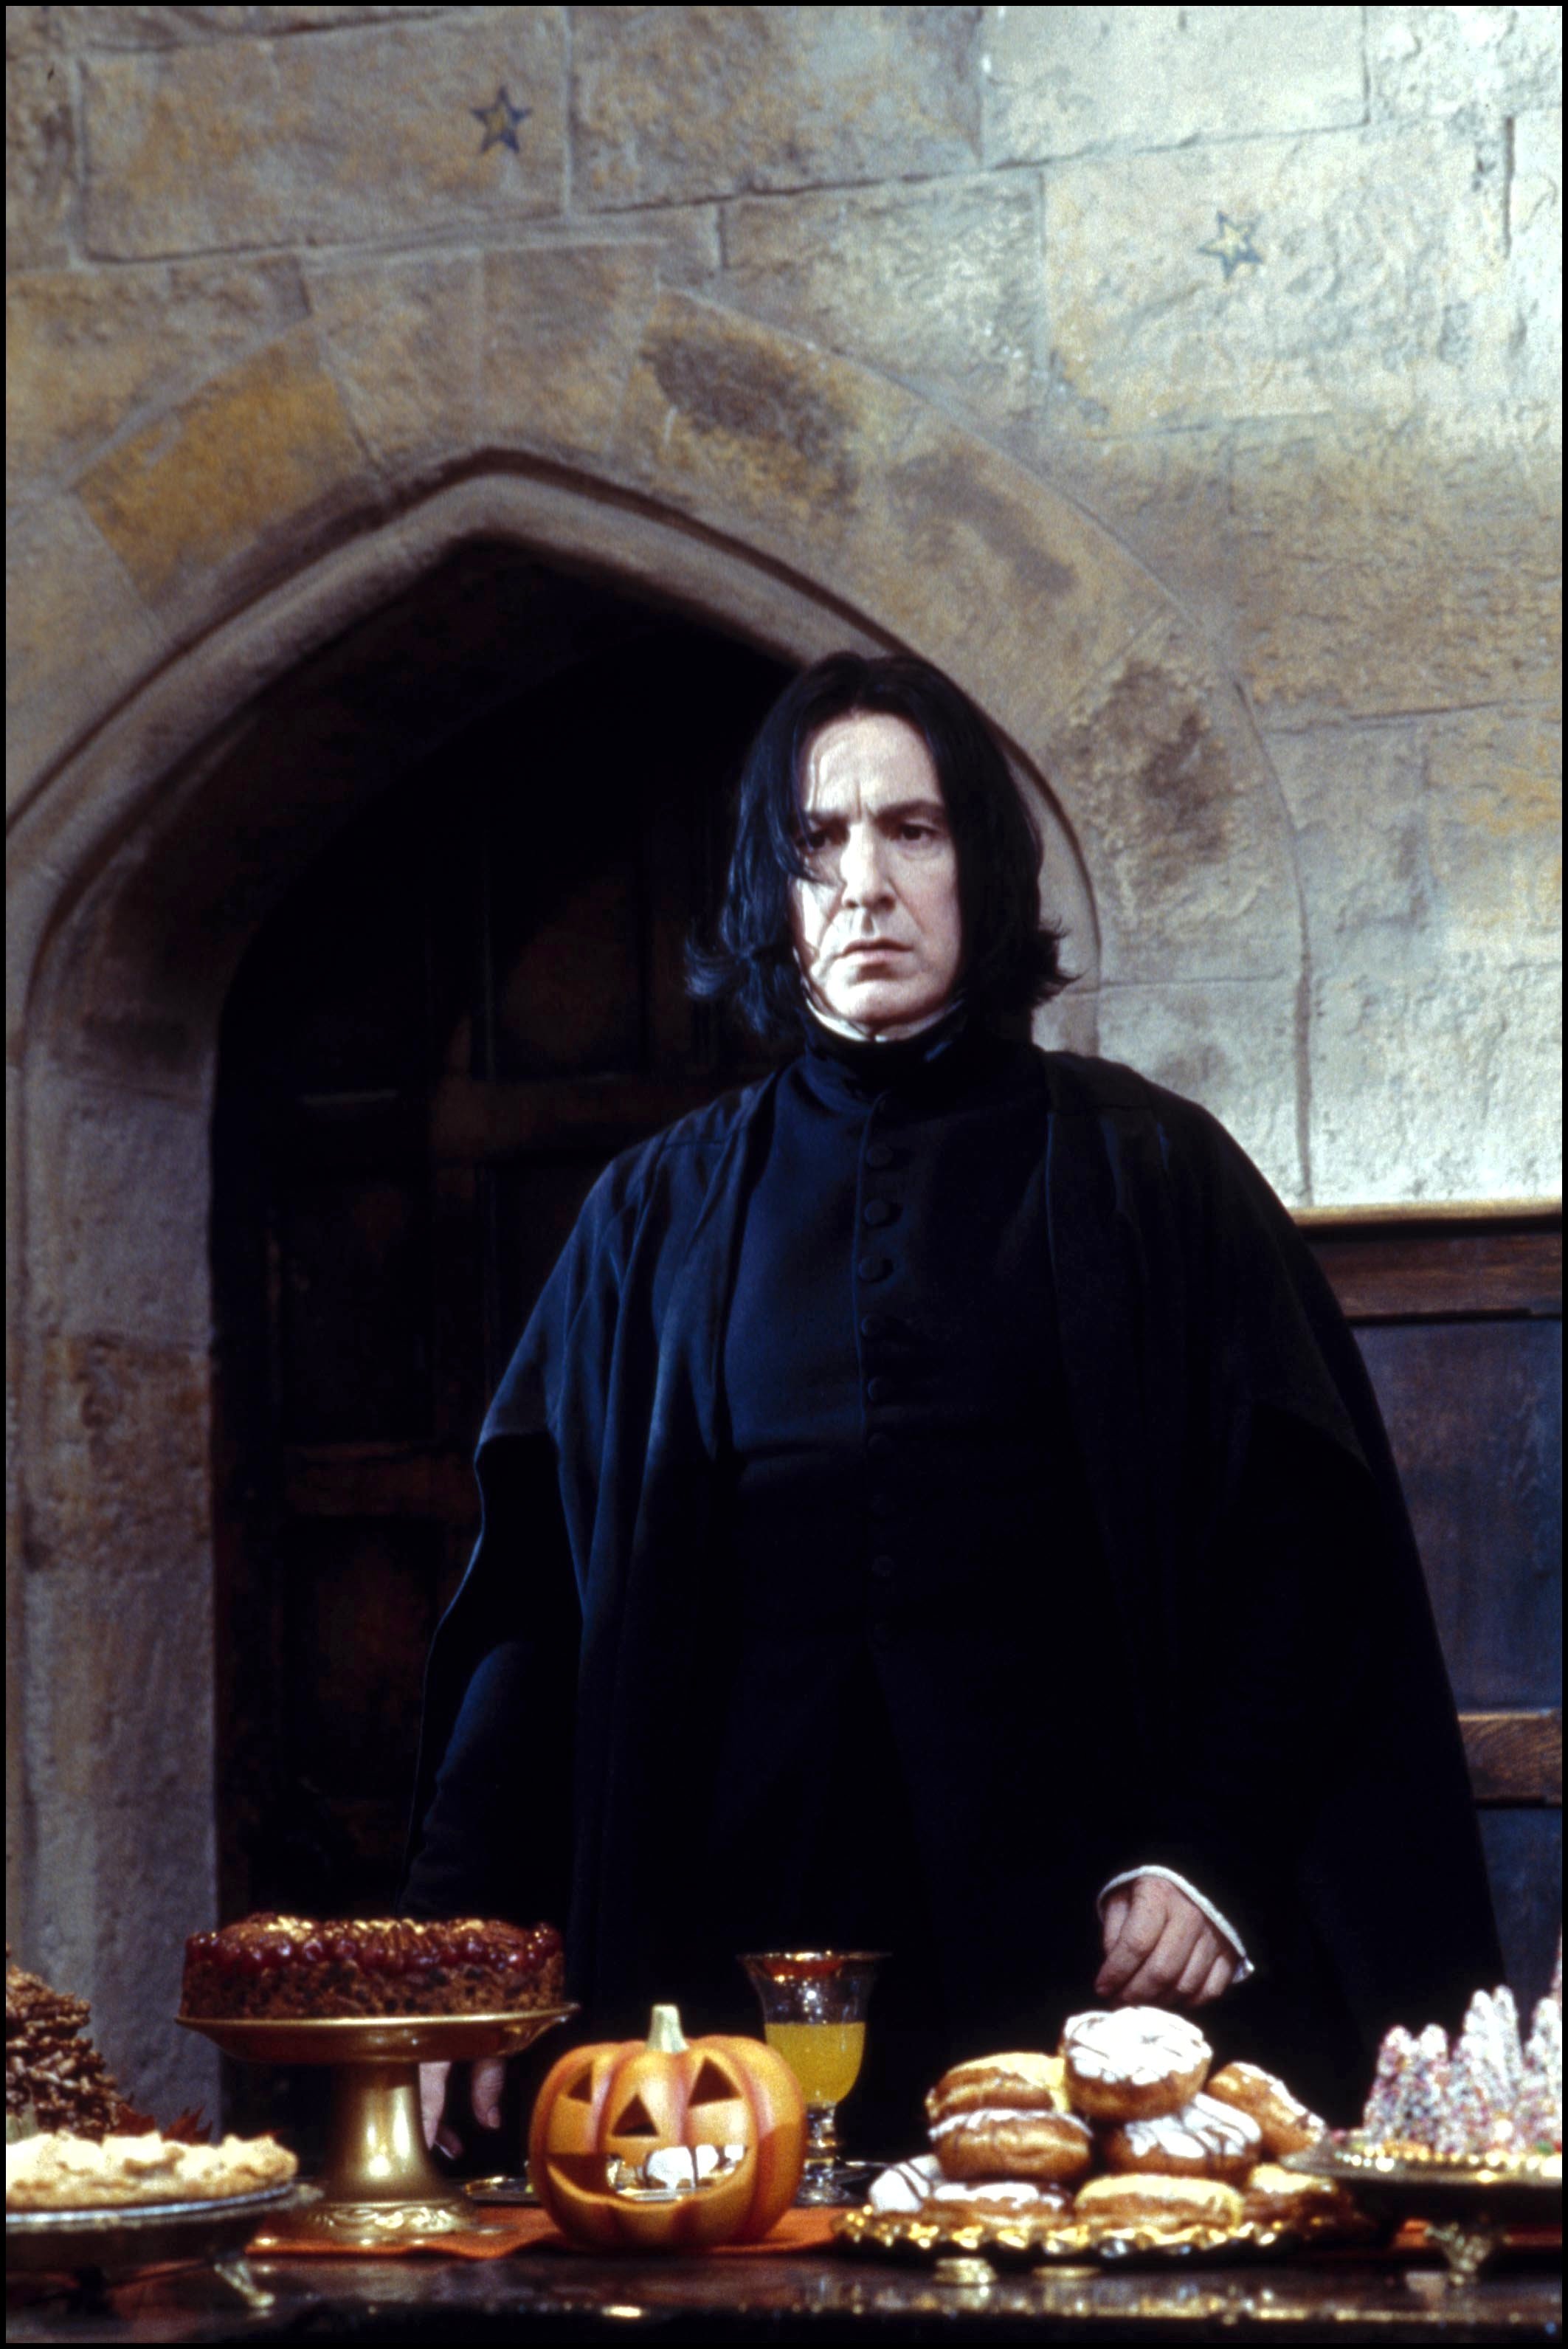 Alan Rickman in Harry Potter